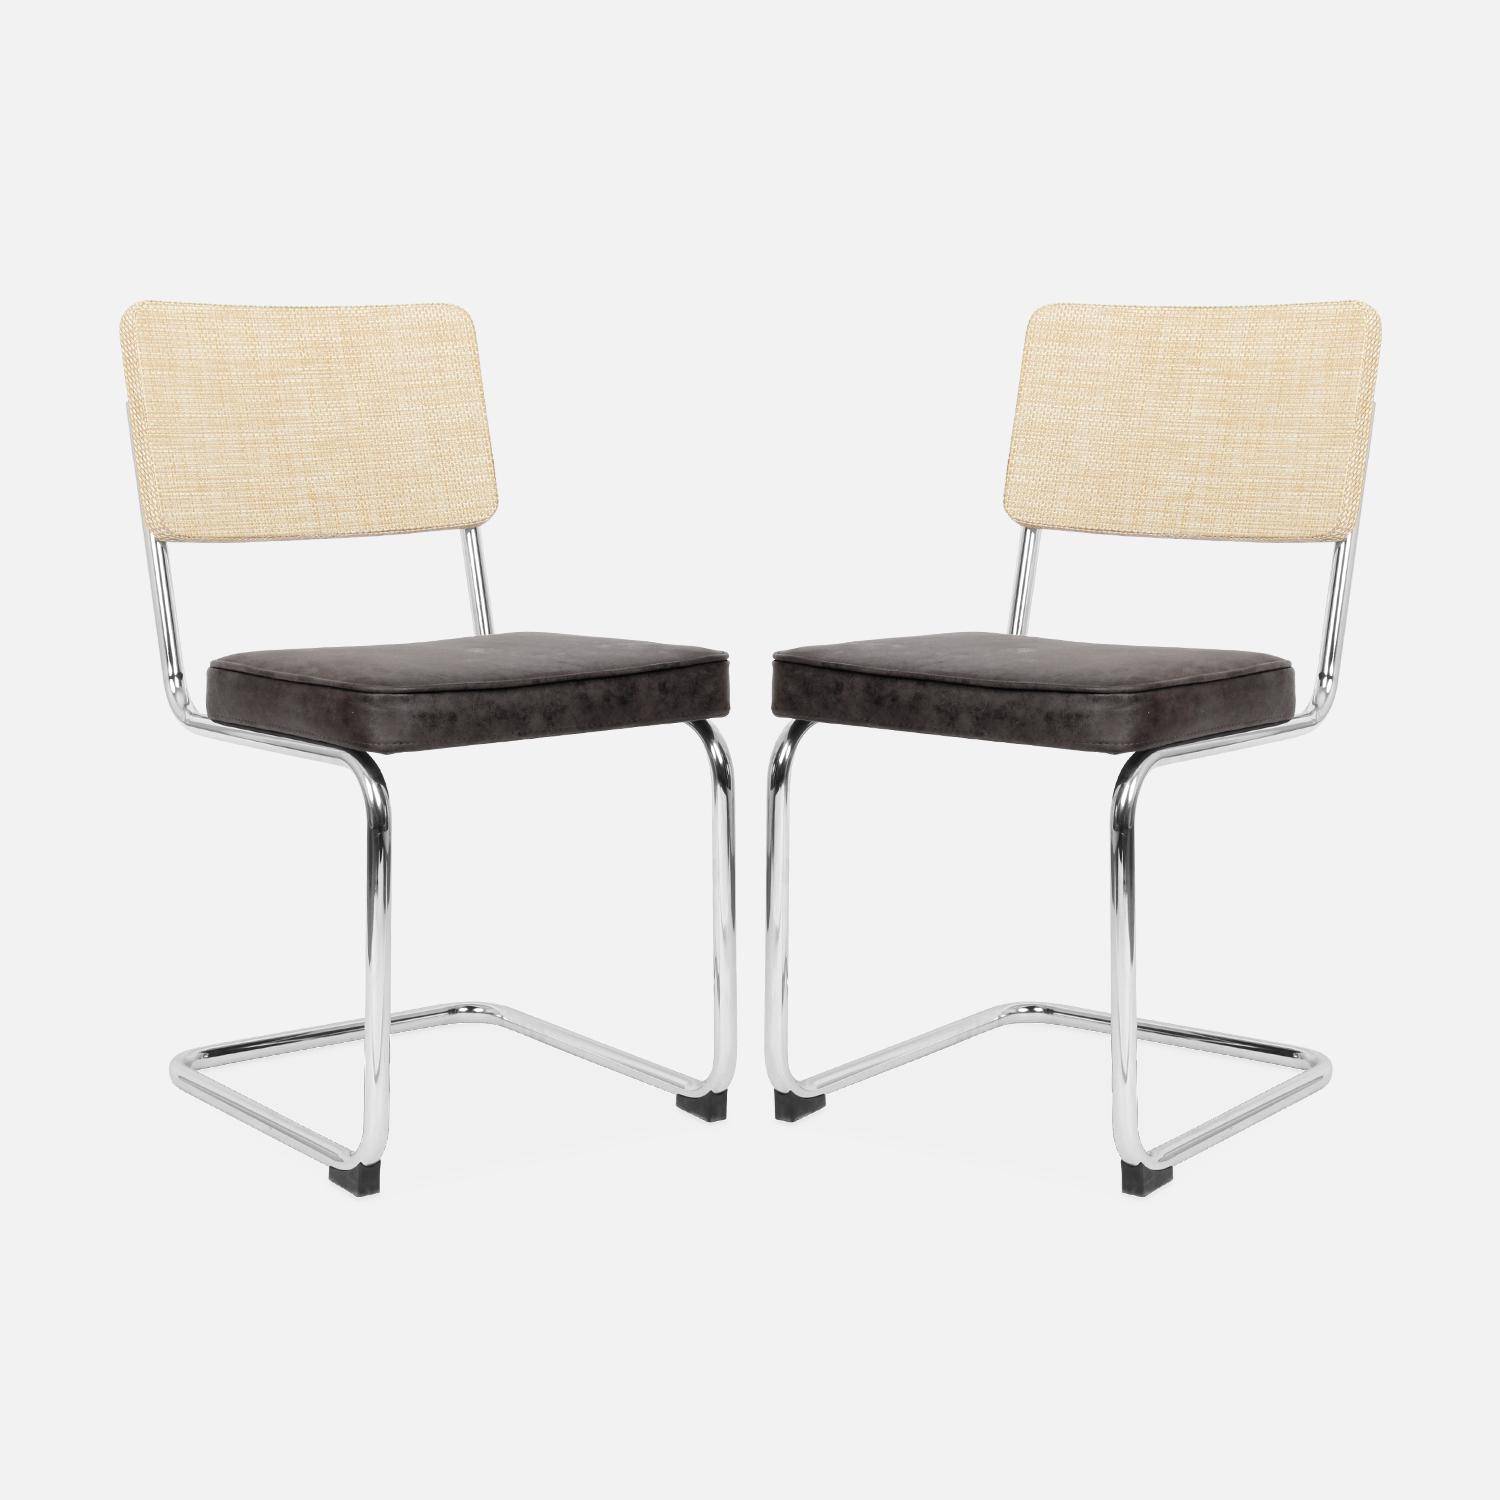 Pair of cantilever cane rattan dining chairs, 46x54.5x84.5cm - Maja - Black,sweeek,Photo5